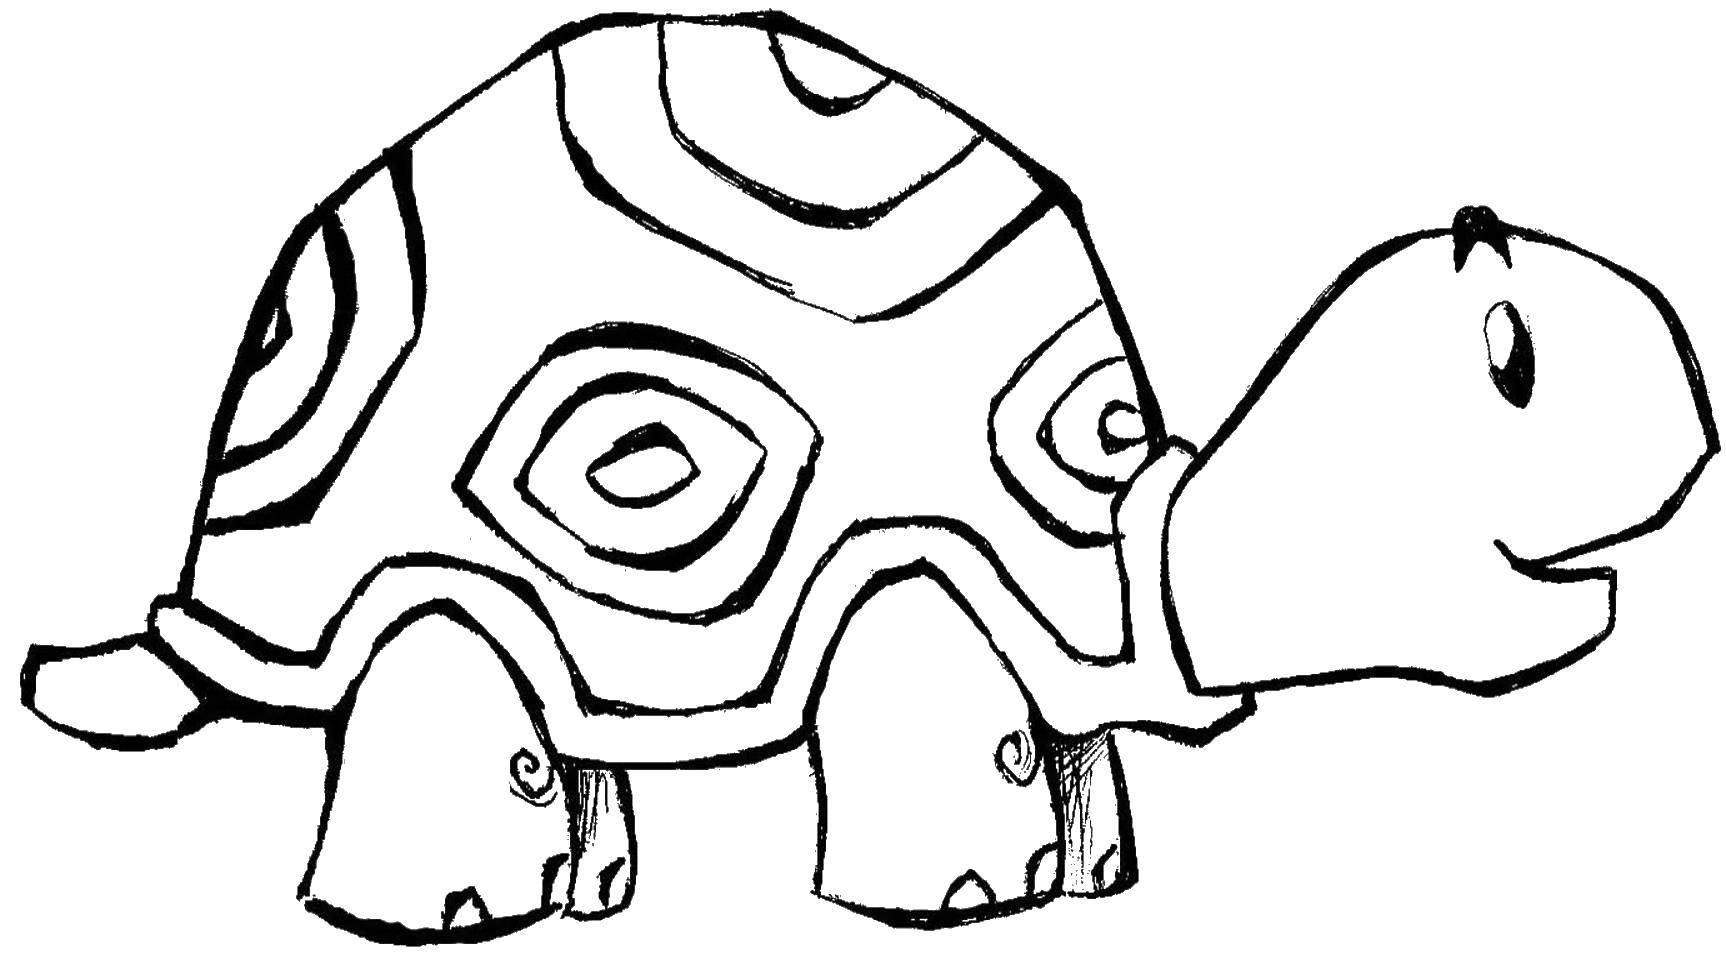 Название: Раскраска Пакемон - черепашка. Категория: Животные. Теги: Животные, черепаха.